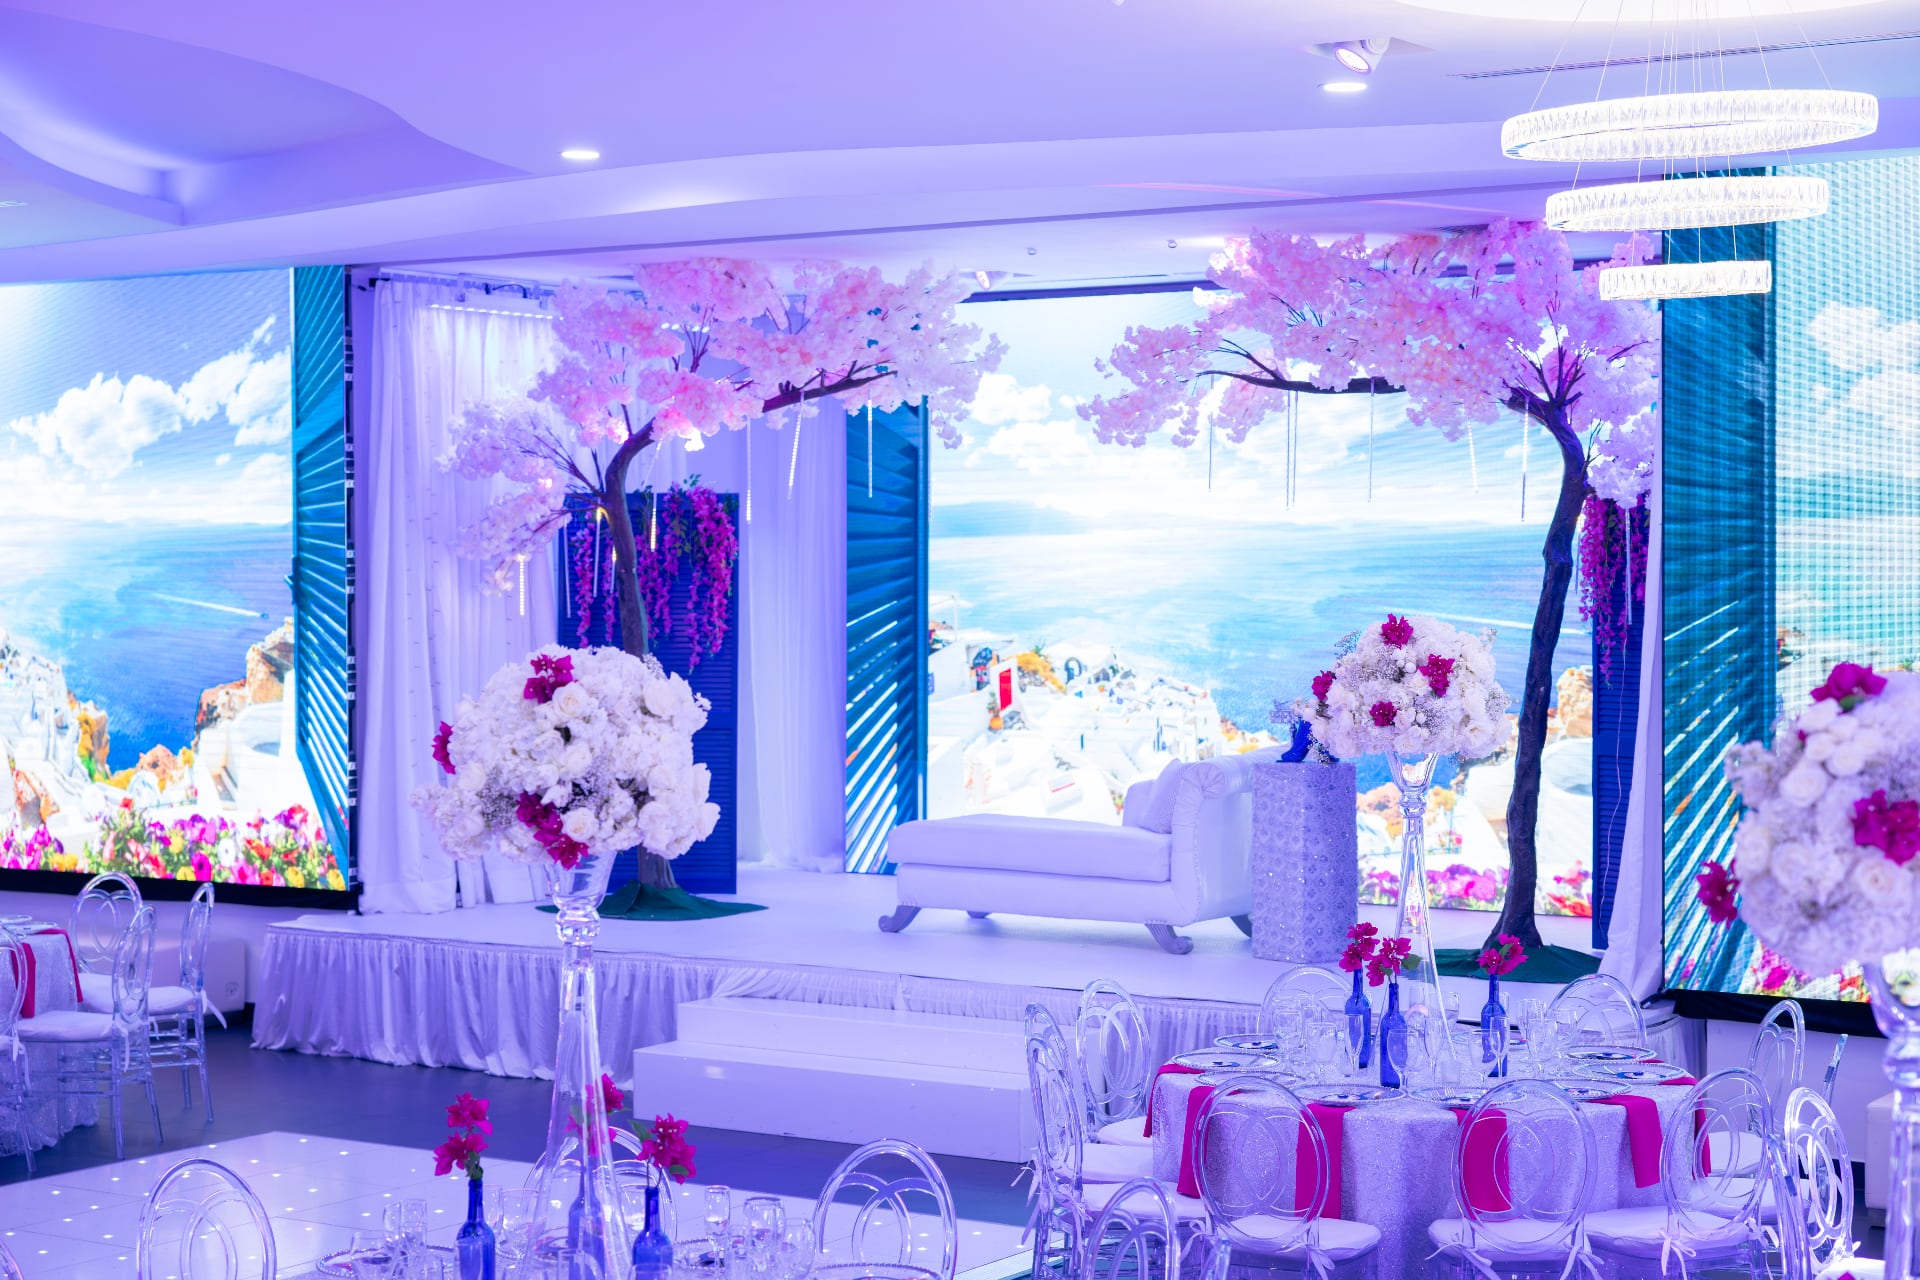 Greece Windows - Onyx Luxury Banquet Hall